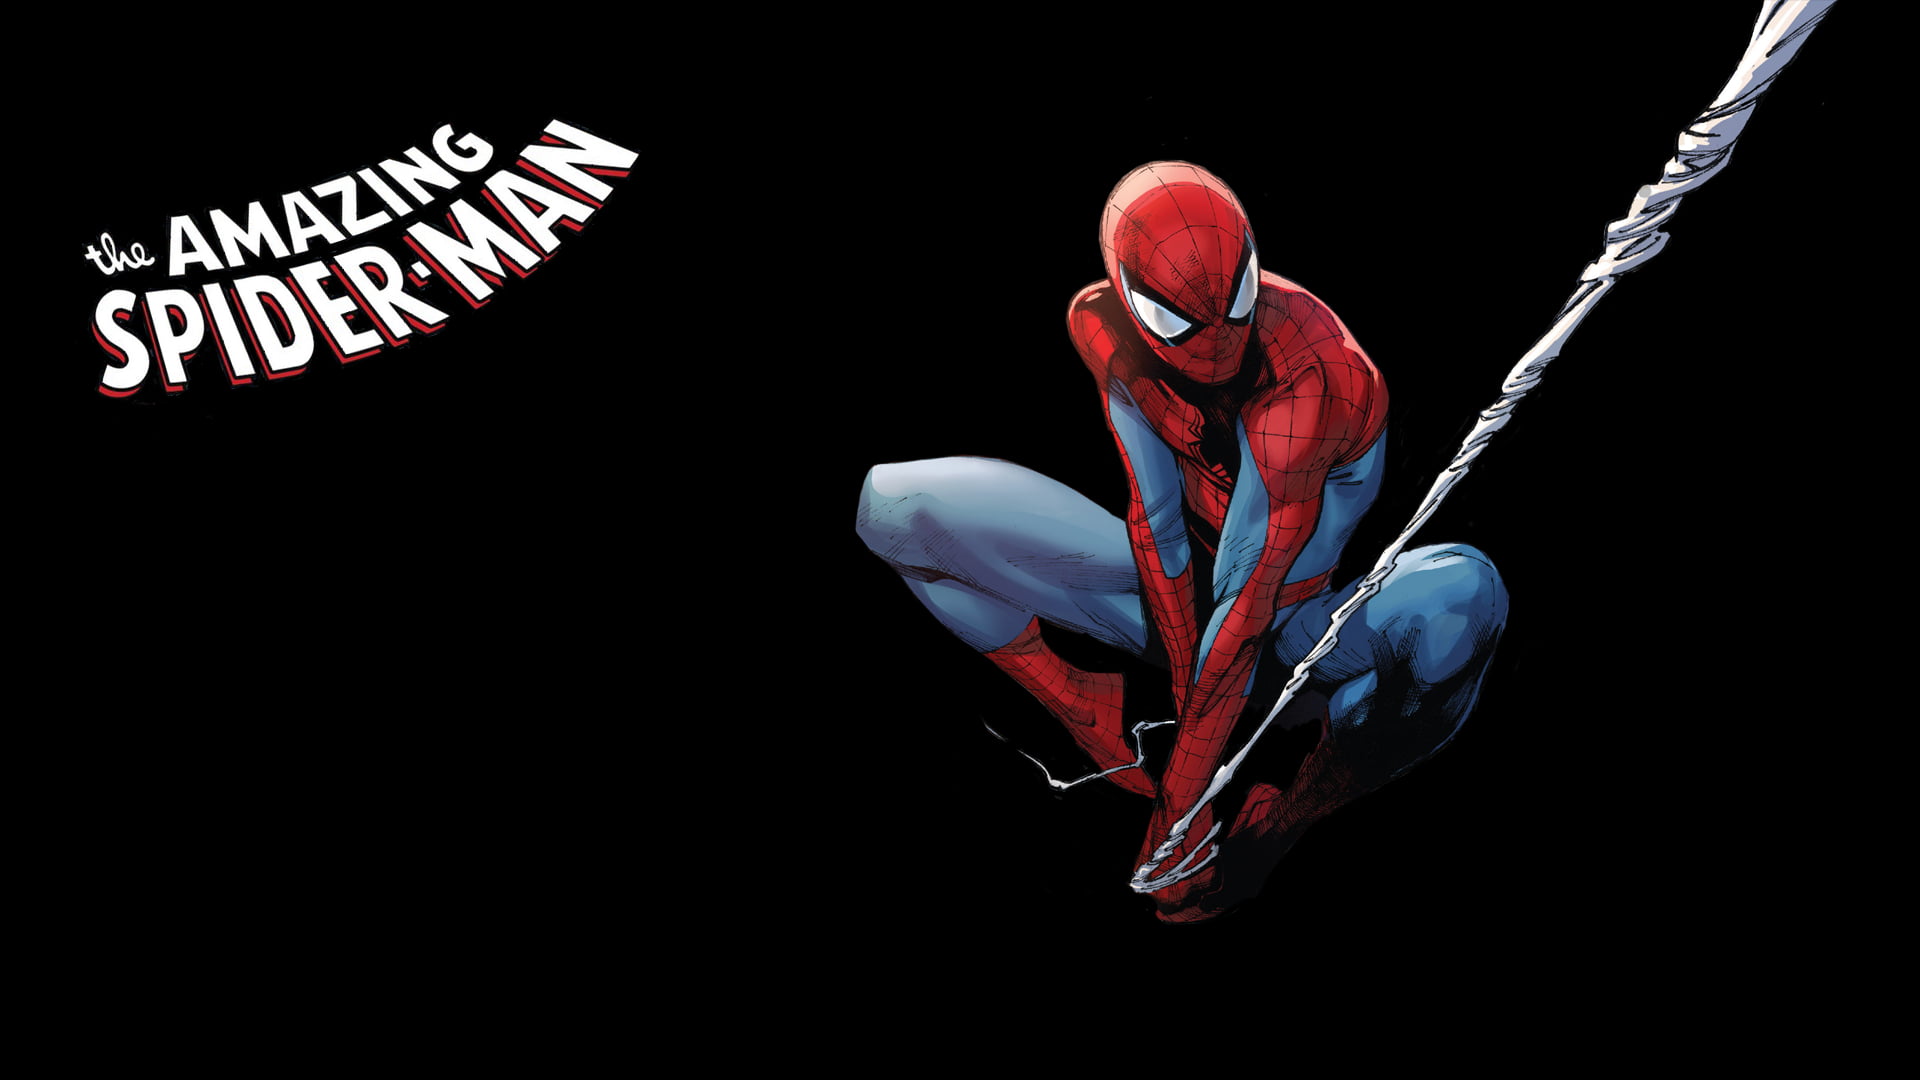 The Amazing Spider-Man digital wallpaper, Marvel Comics, black background